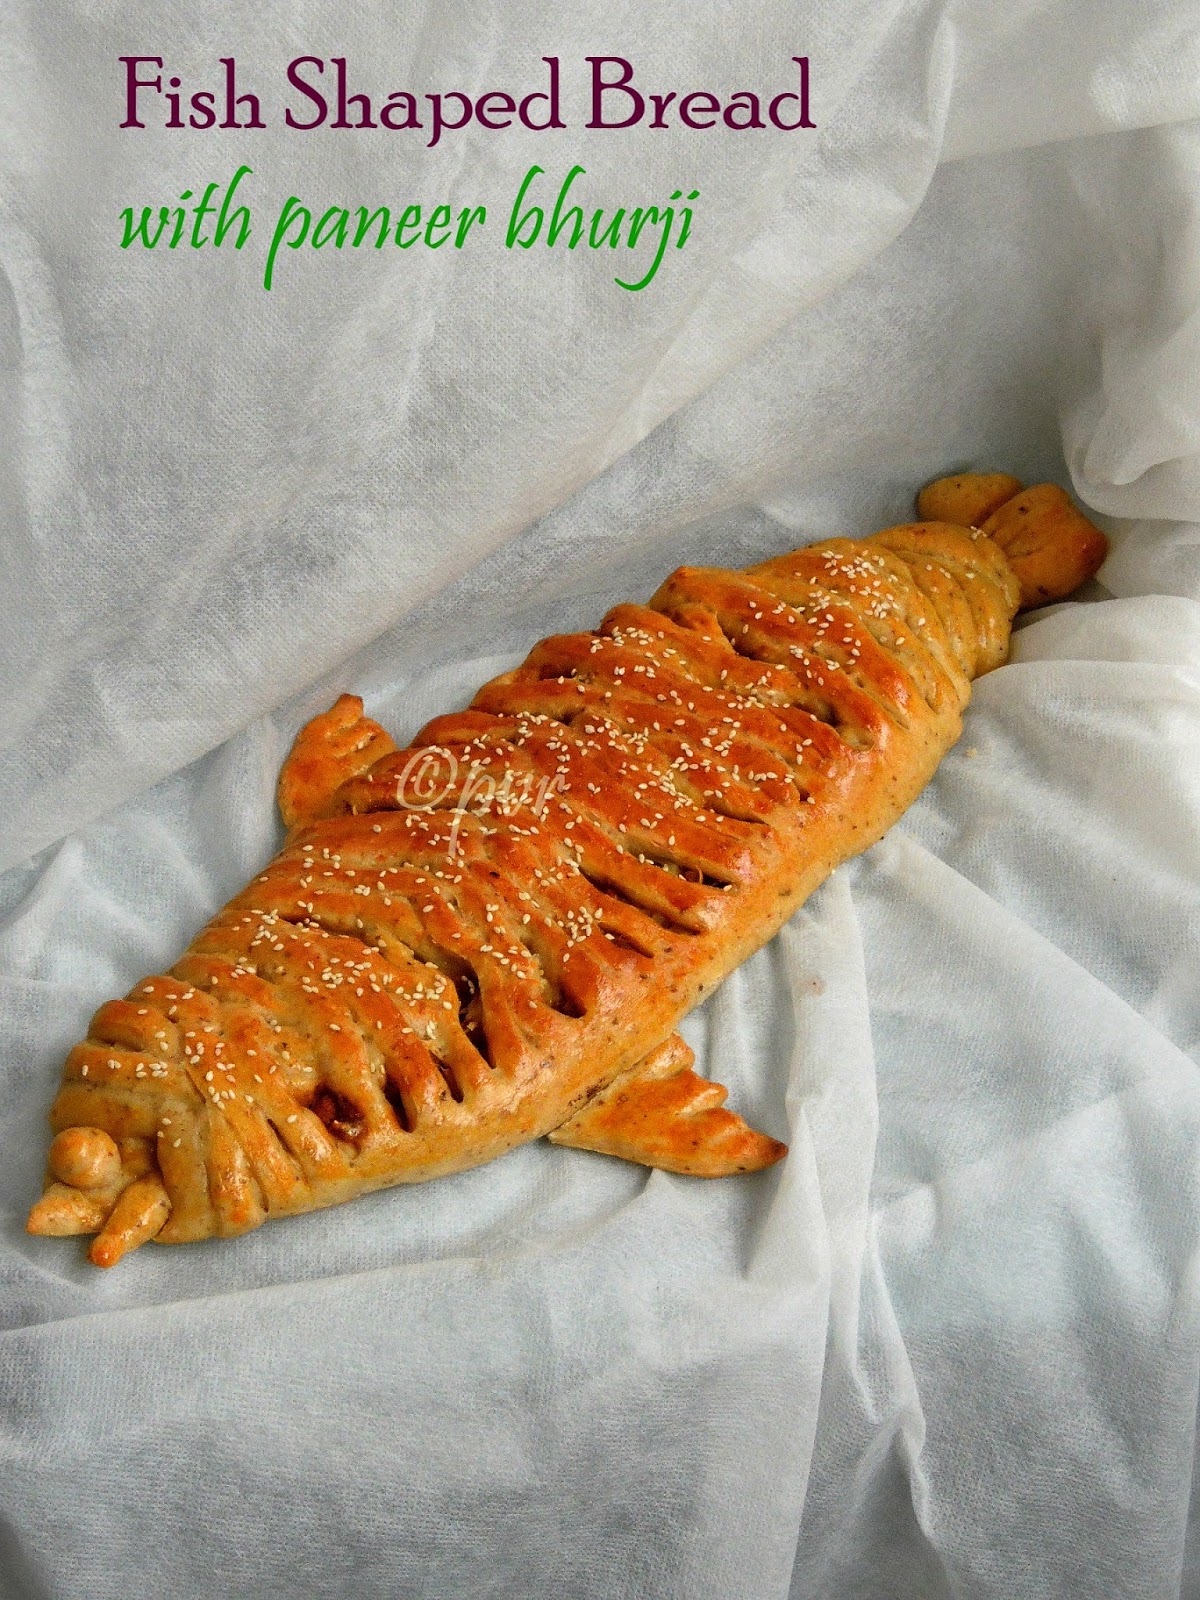 Fish shaped bread with paneer bhurji